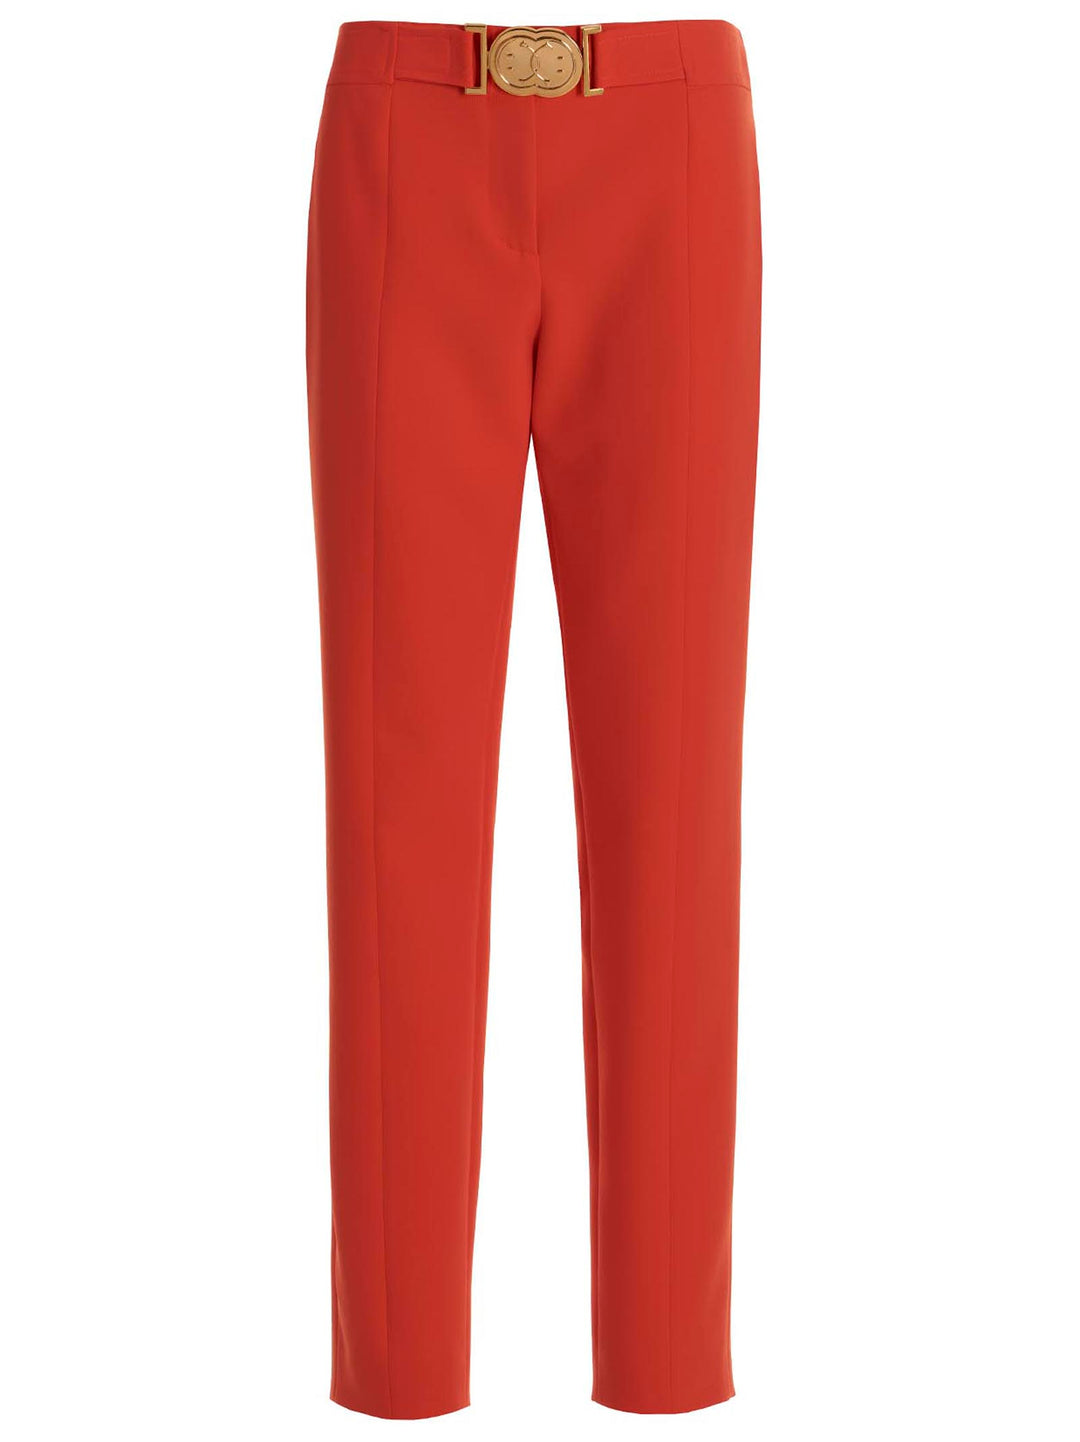 'Smiley' Pantaloni Rosso